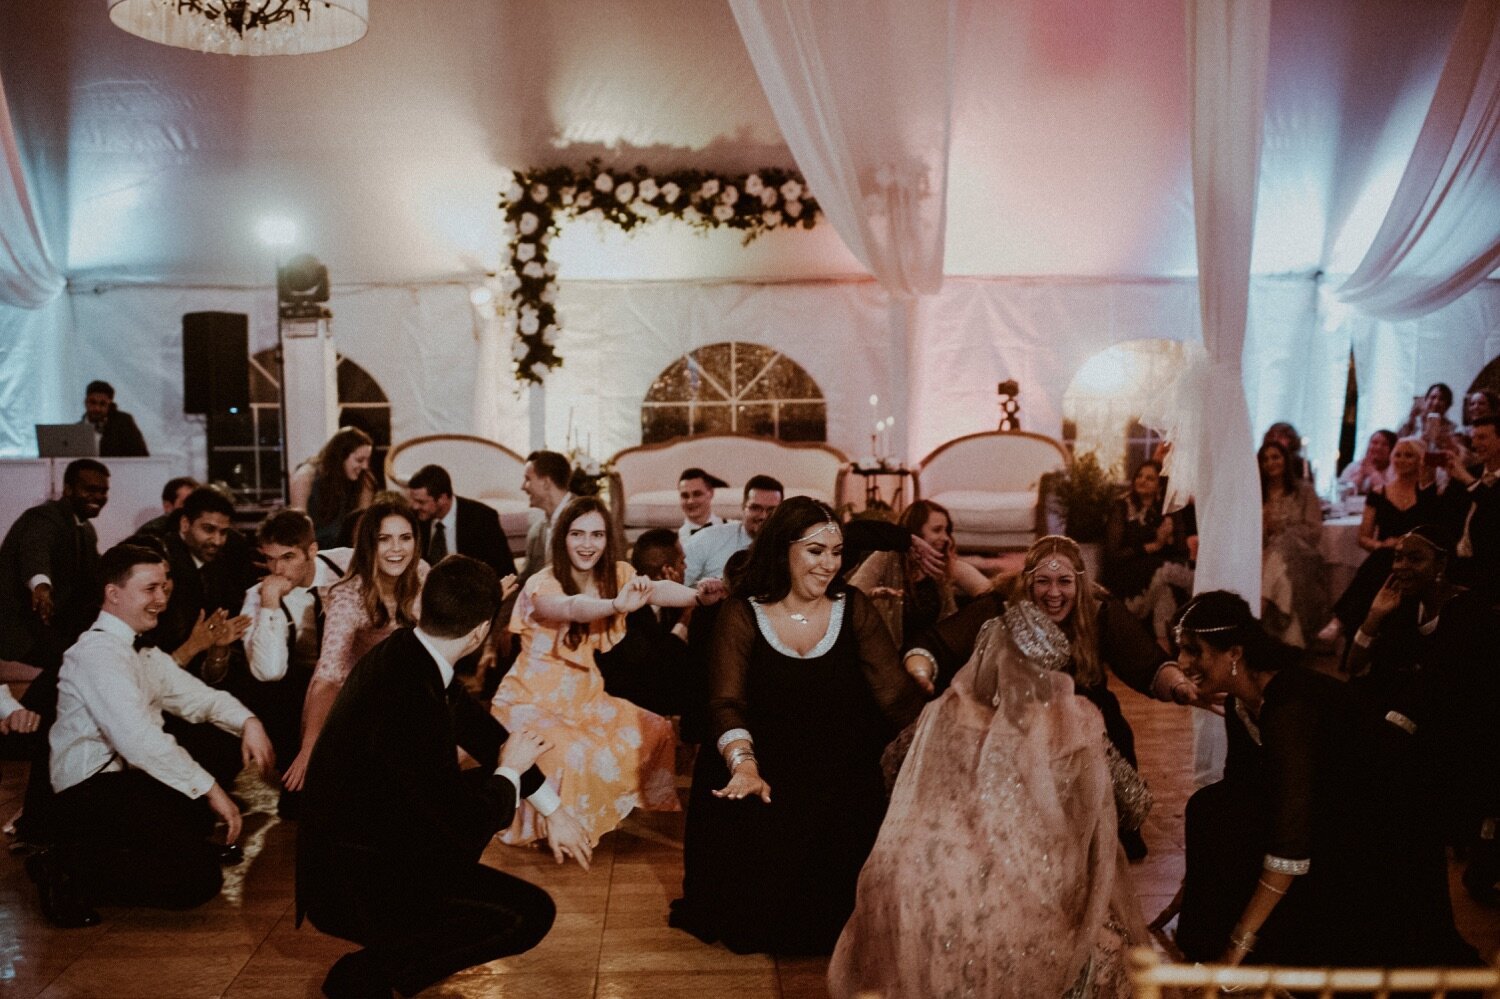 094_042019-zoya+jordan-wedding-809_Desi+Wedding+at+the+Searles+Castle+in+New+Hampshire+.jpg